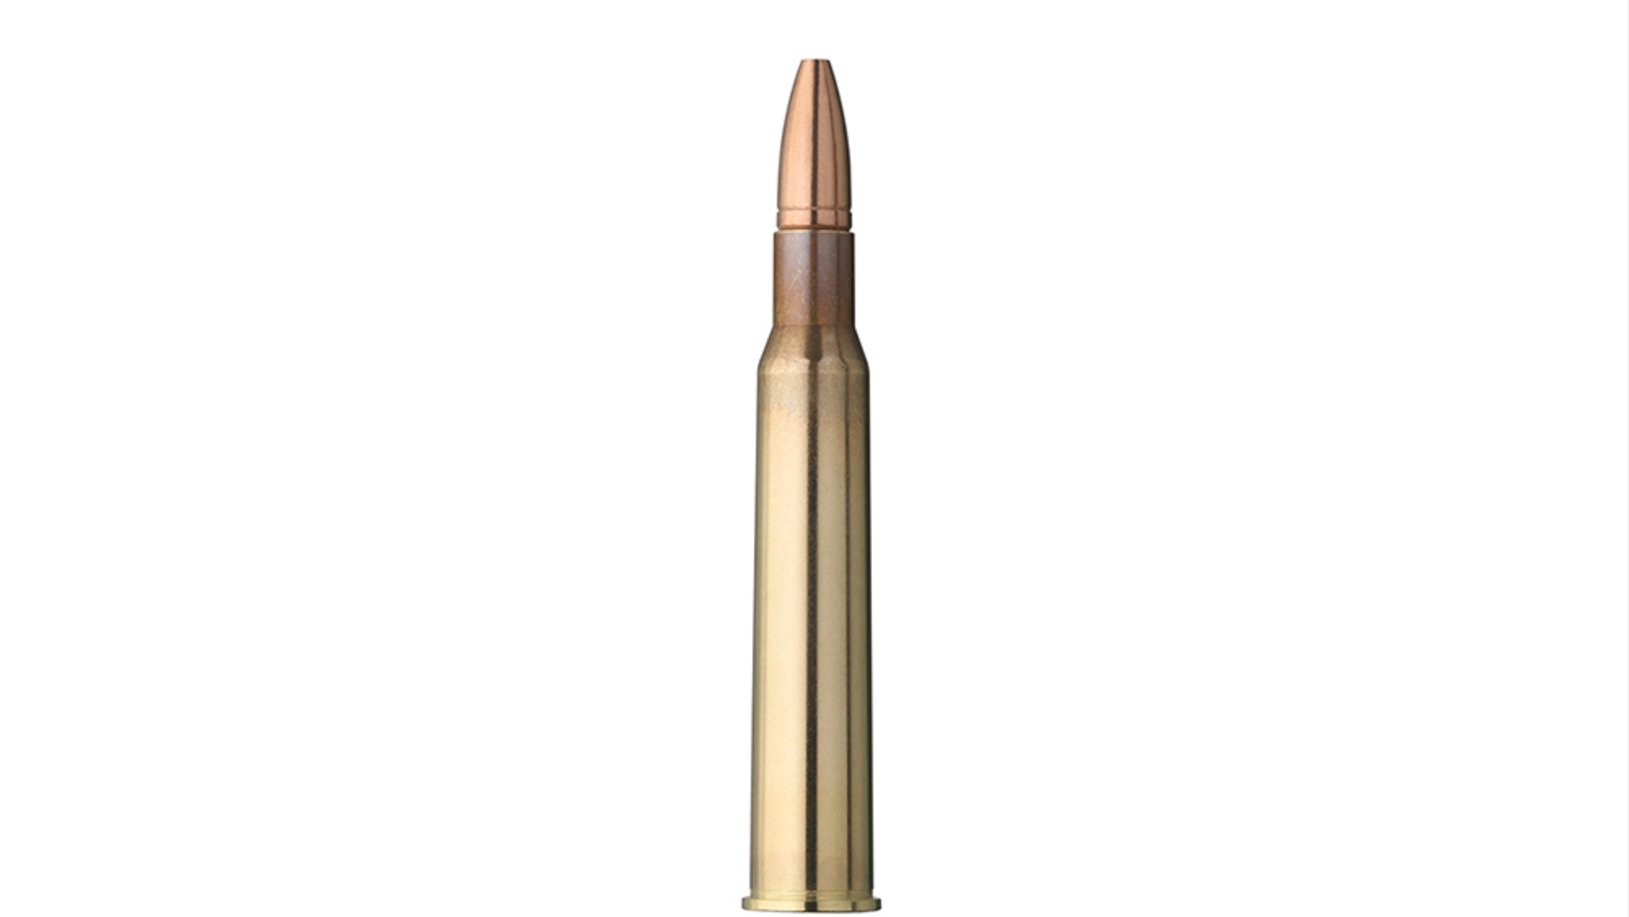 Single bullet view of GECO 7x65 R ZERO 8,2g